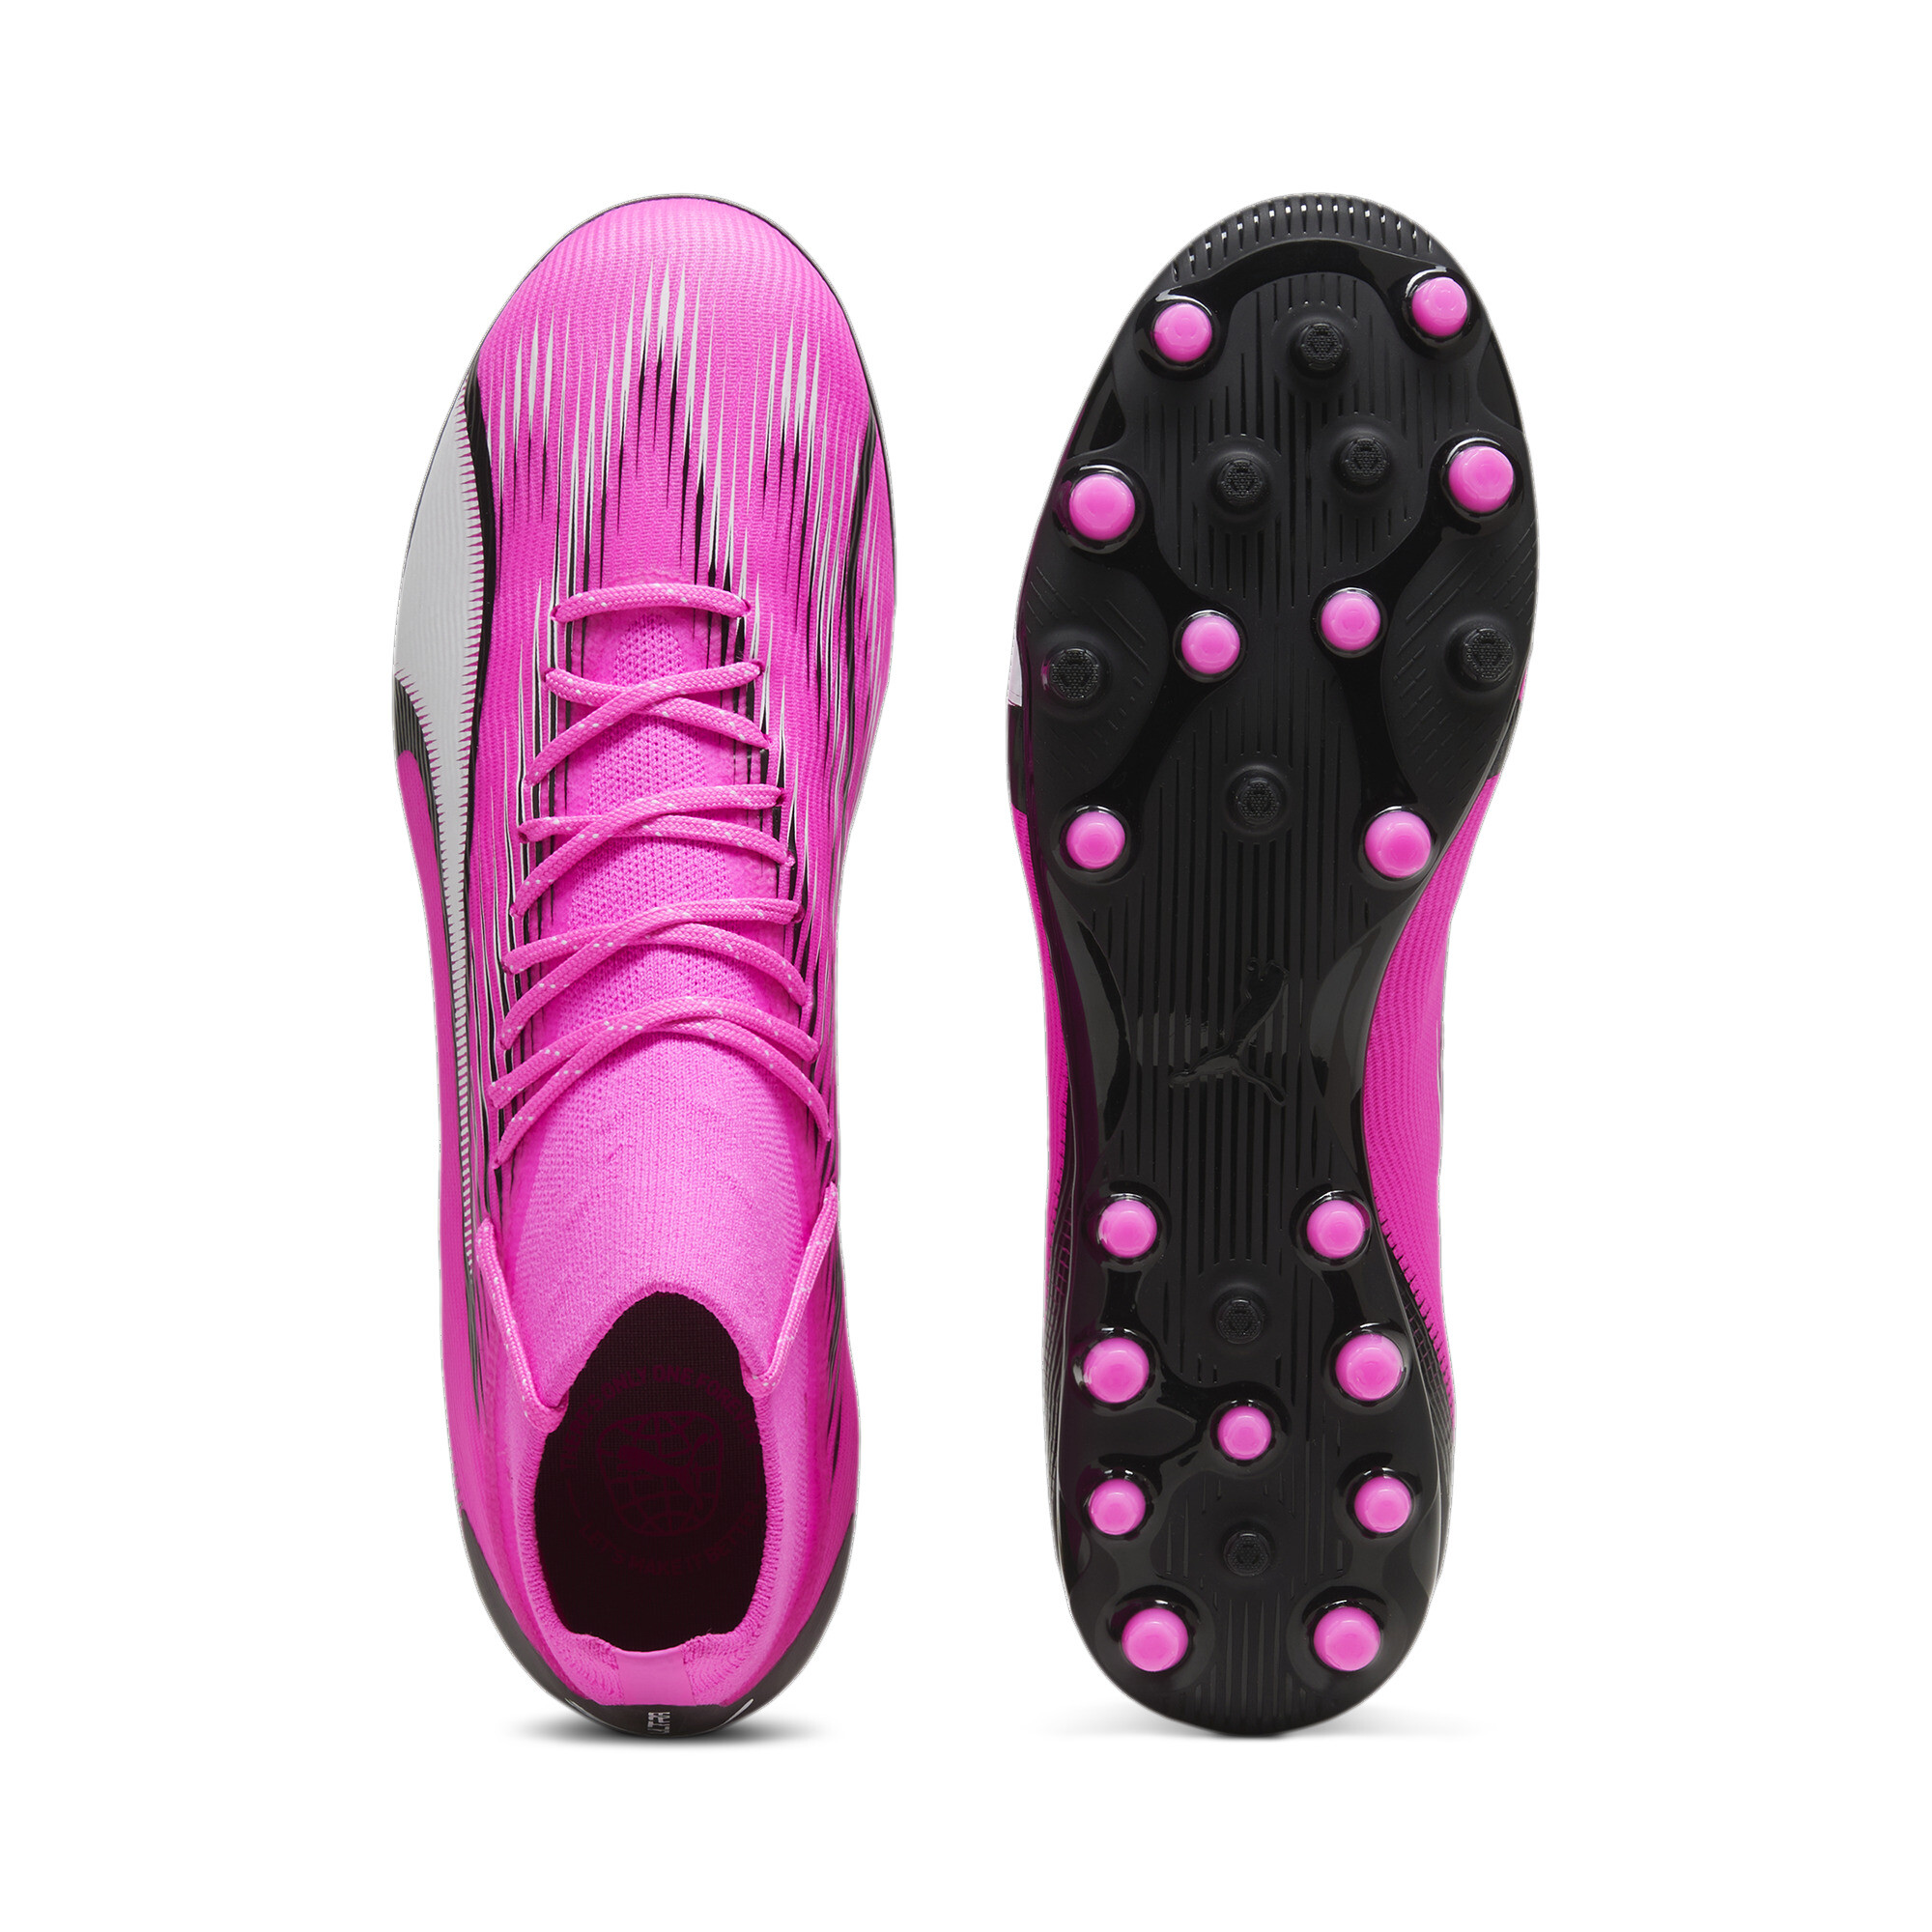 Men's Puma ULTRA PRO MG Football Boots, Pink, Size 42.5, Performance